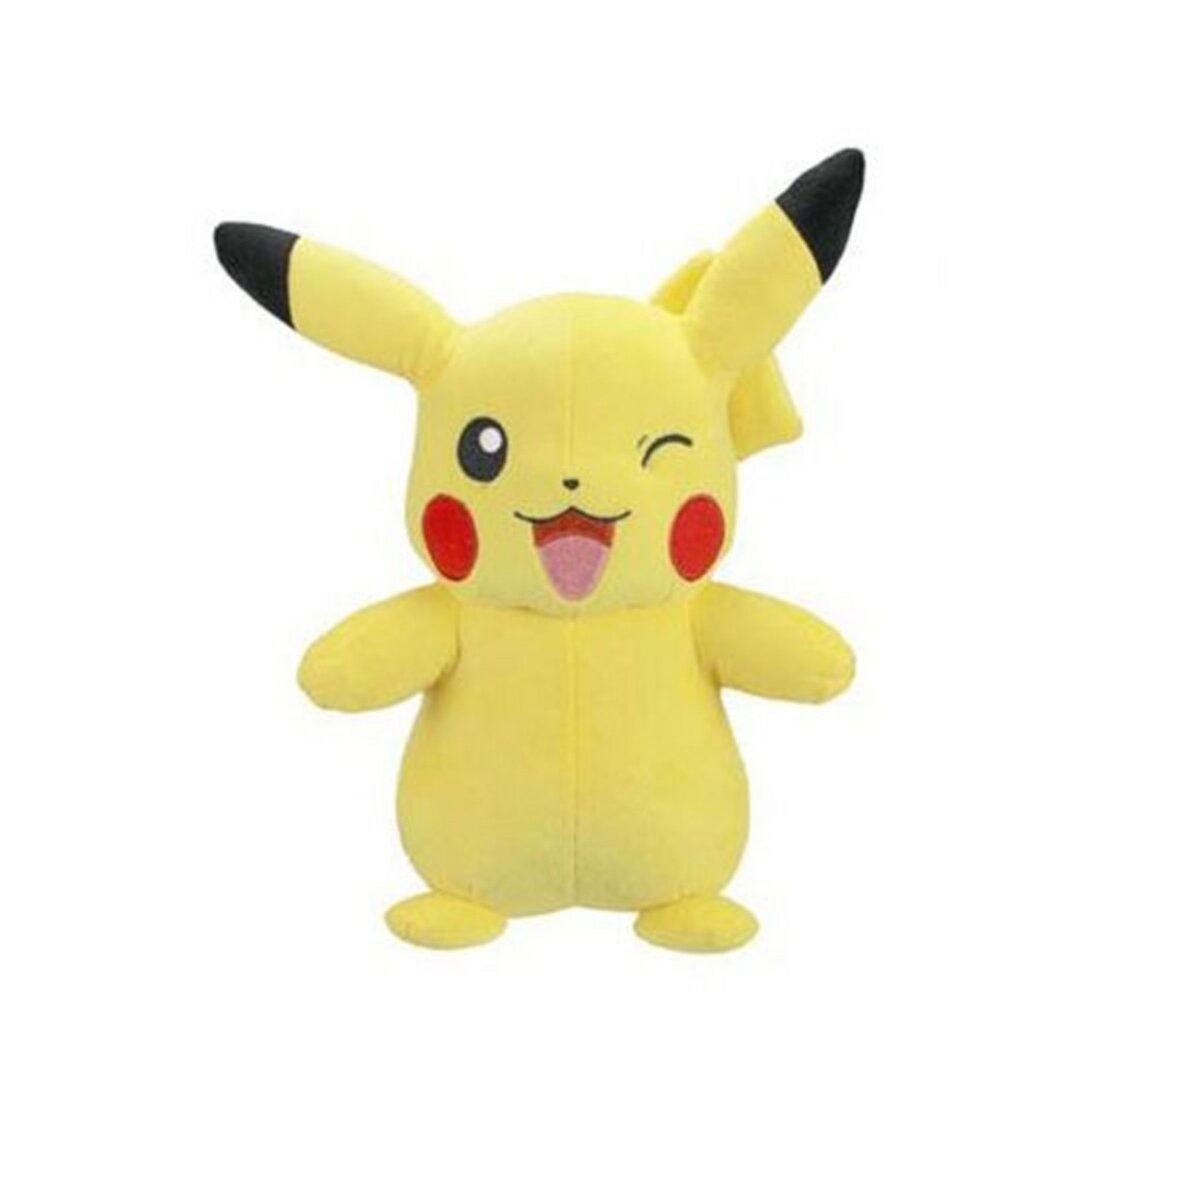 Peluche Pokémon - Pikachu 30 cm